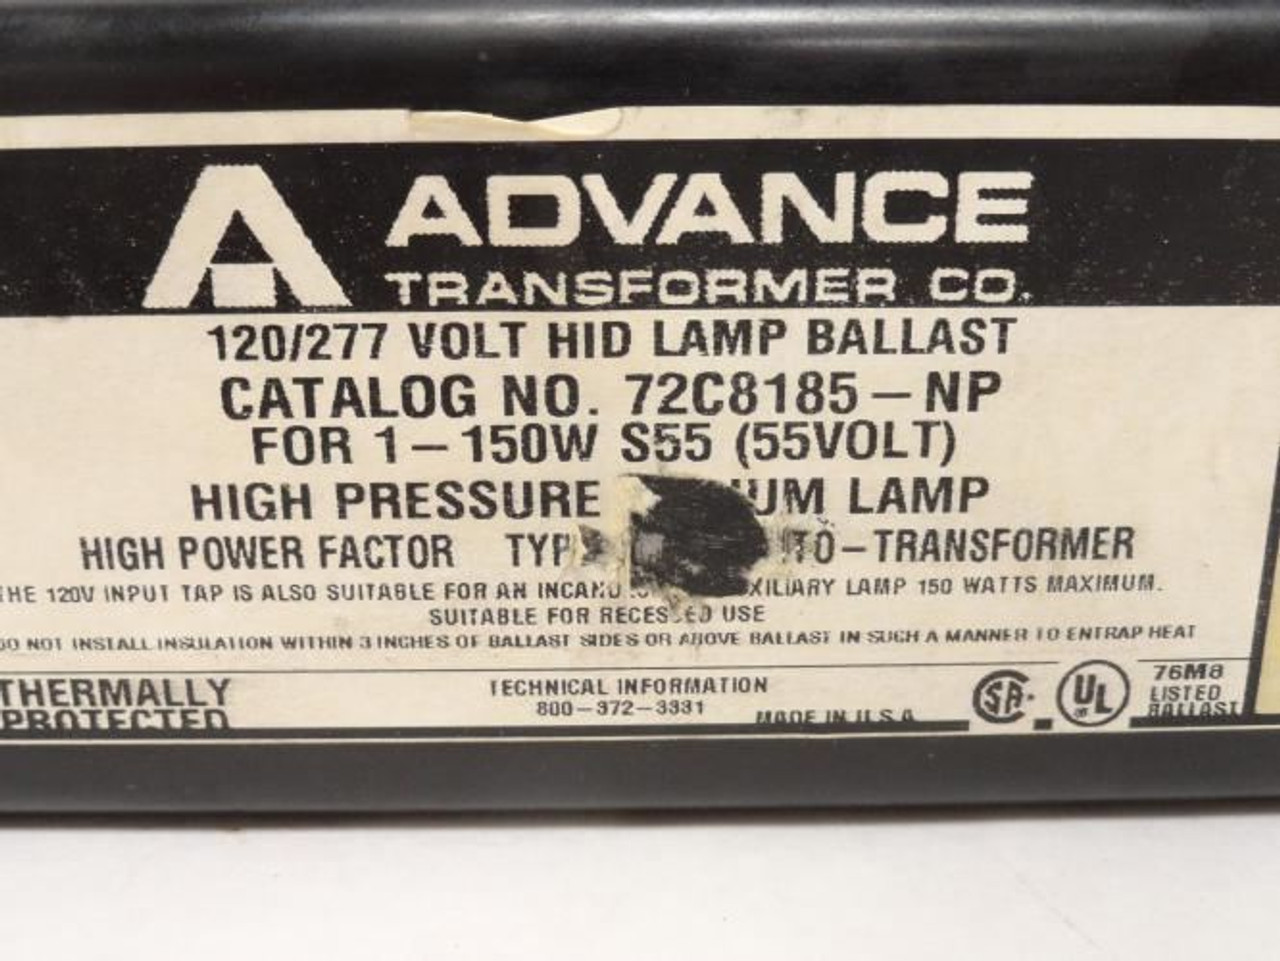 Philips 72C8185-NP; Advance Lamp Ballast; 120/277VAC